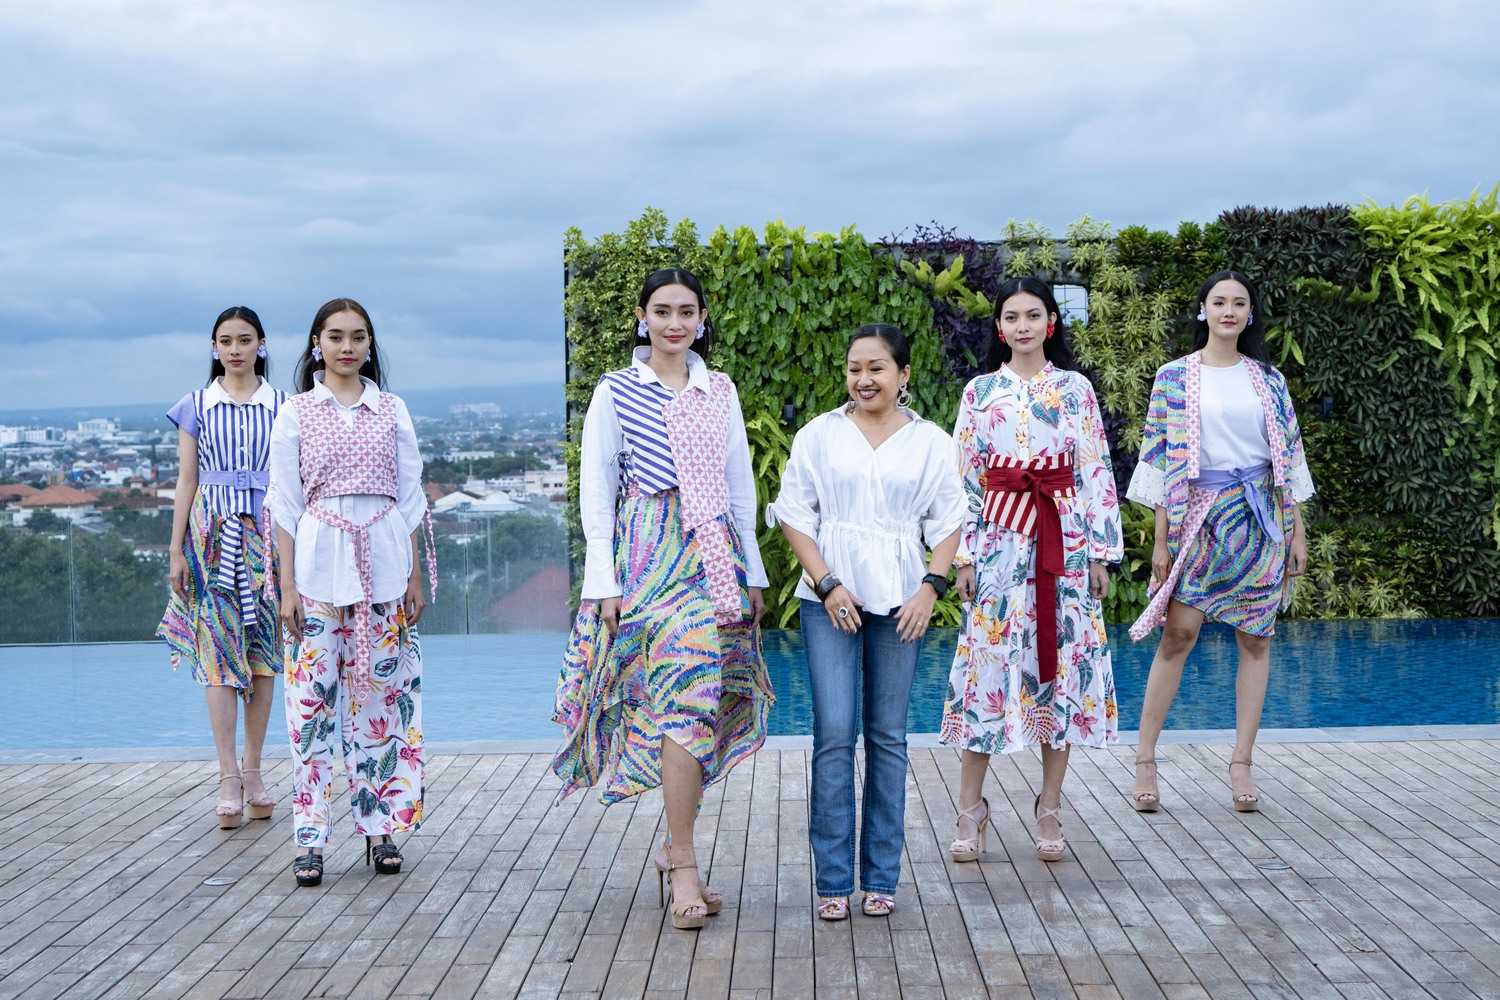 Novotel Suites Yogyakarta Suguhkan Fashion Show Karya Designer Yogyakarta